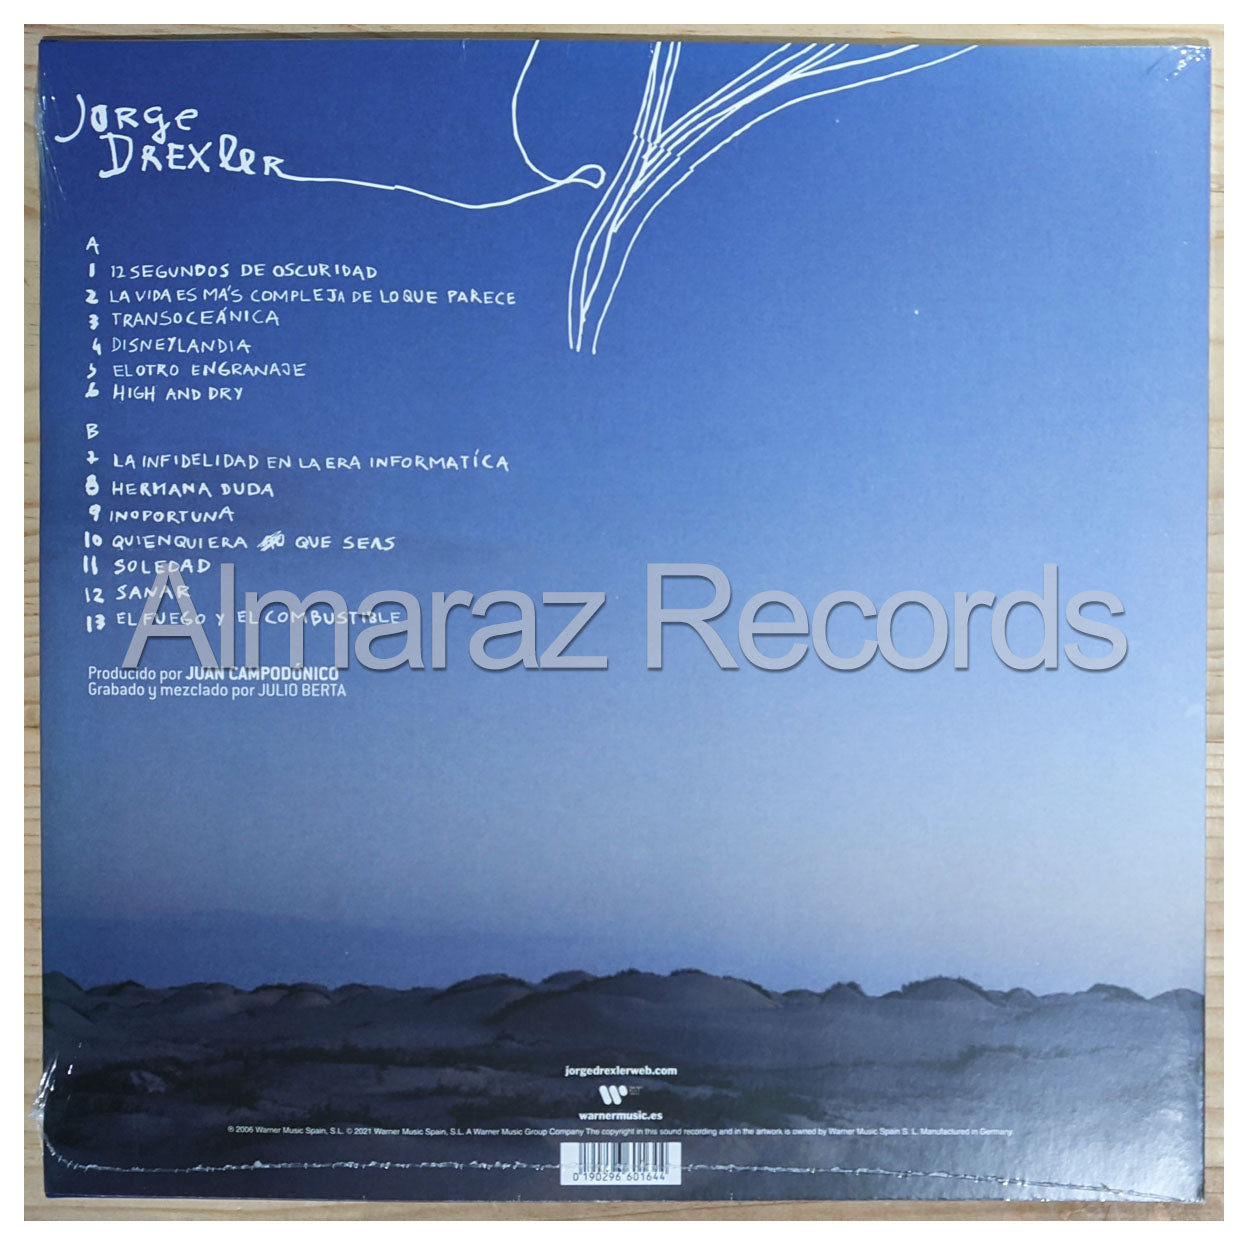 Jorge Drexler 12 Segundos De Oscuridad Vinyl LP+CD